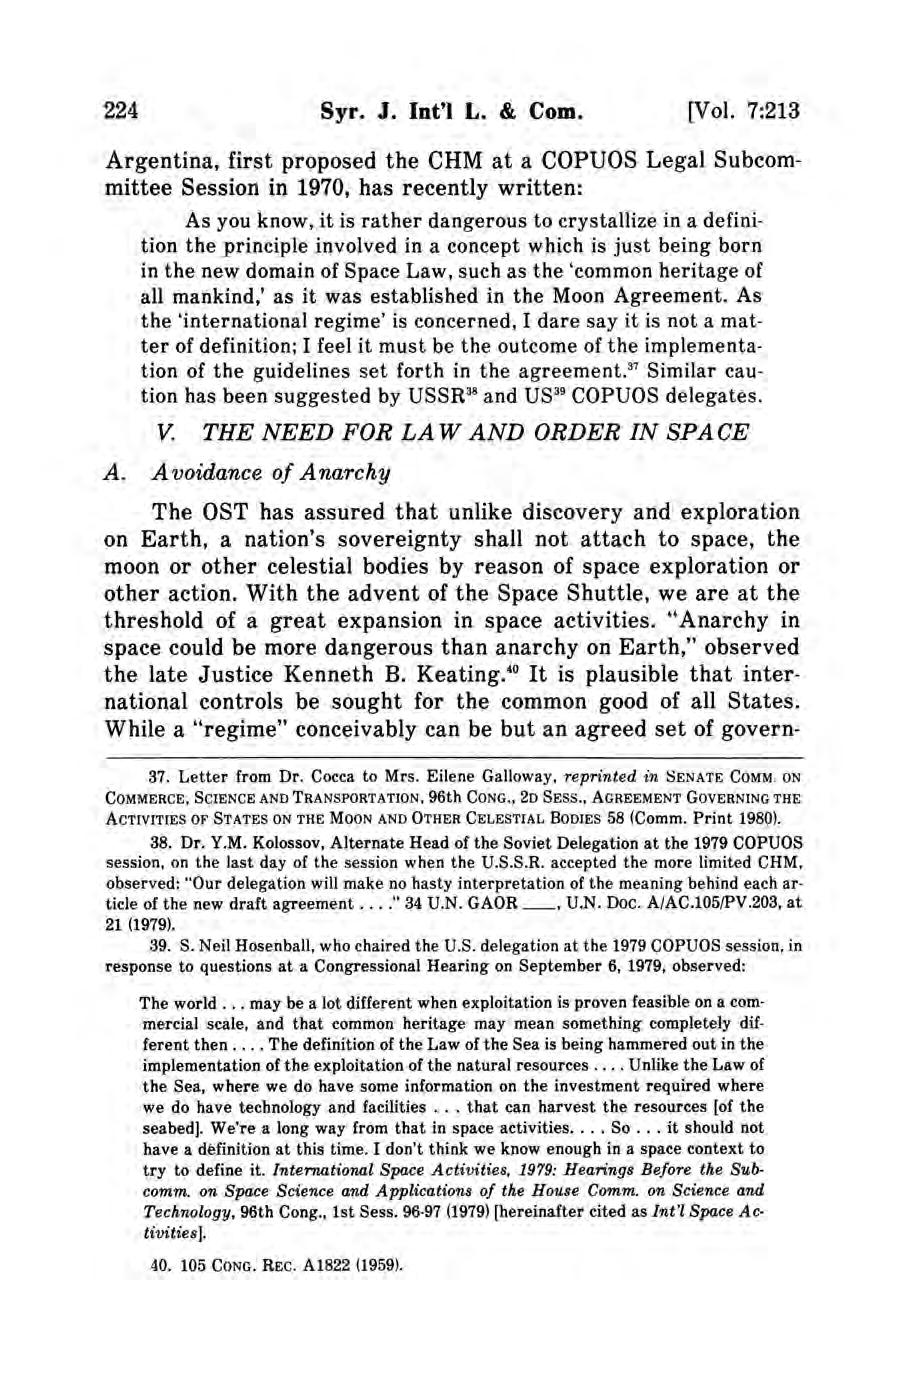 Syracuse Journal of International Law and Commerce, Vol. 7, No. 2 [1980], Art. 6 224 Syr. J. Int'l L. & Com. [Vol.